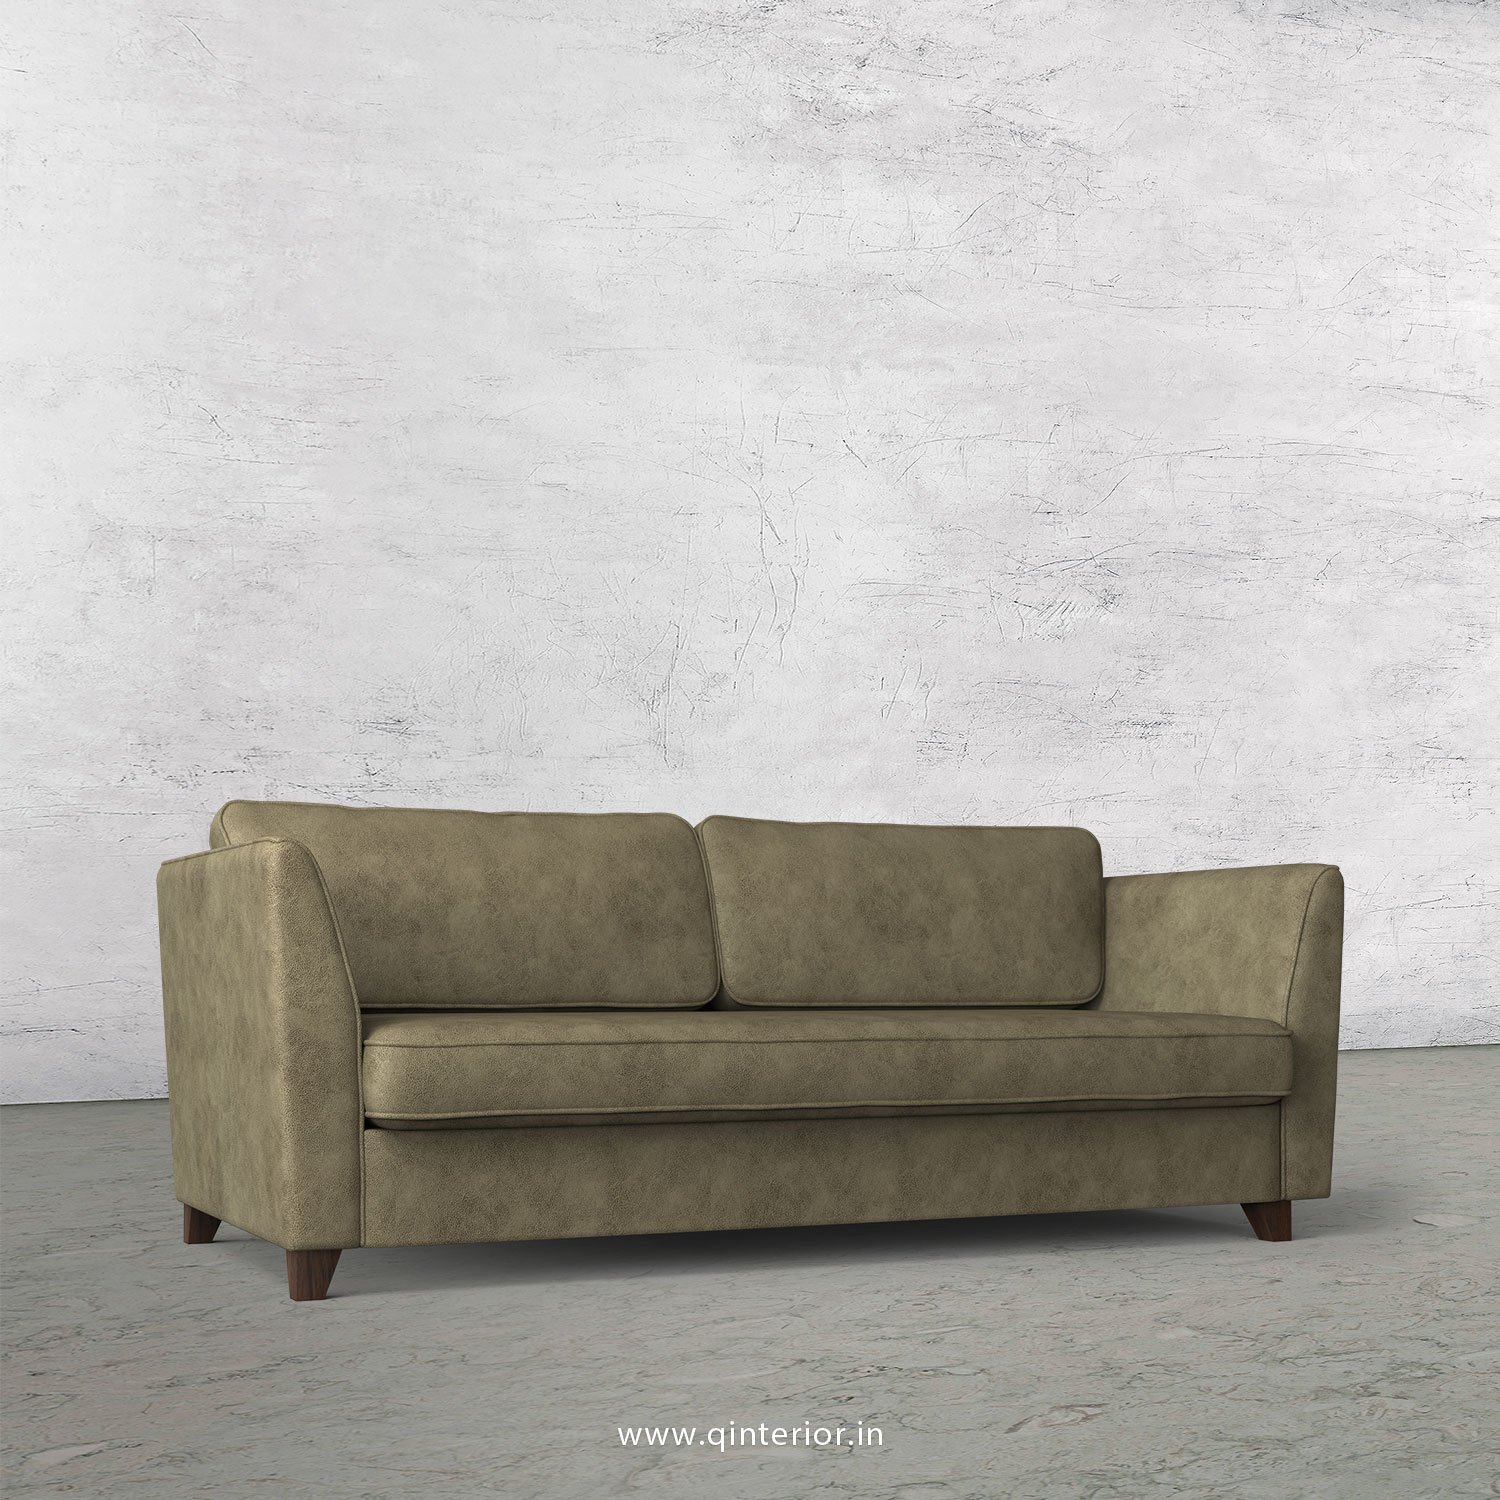 KINGSTONE 3 Seater Sofa in Fab Leather Fabric - SFA004 FL03